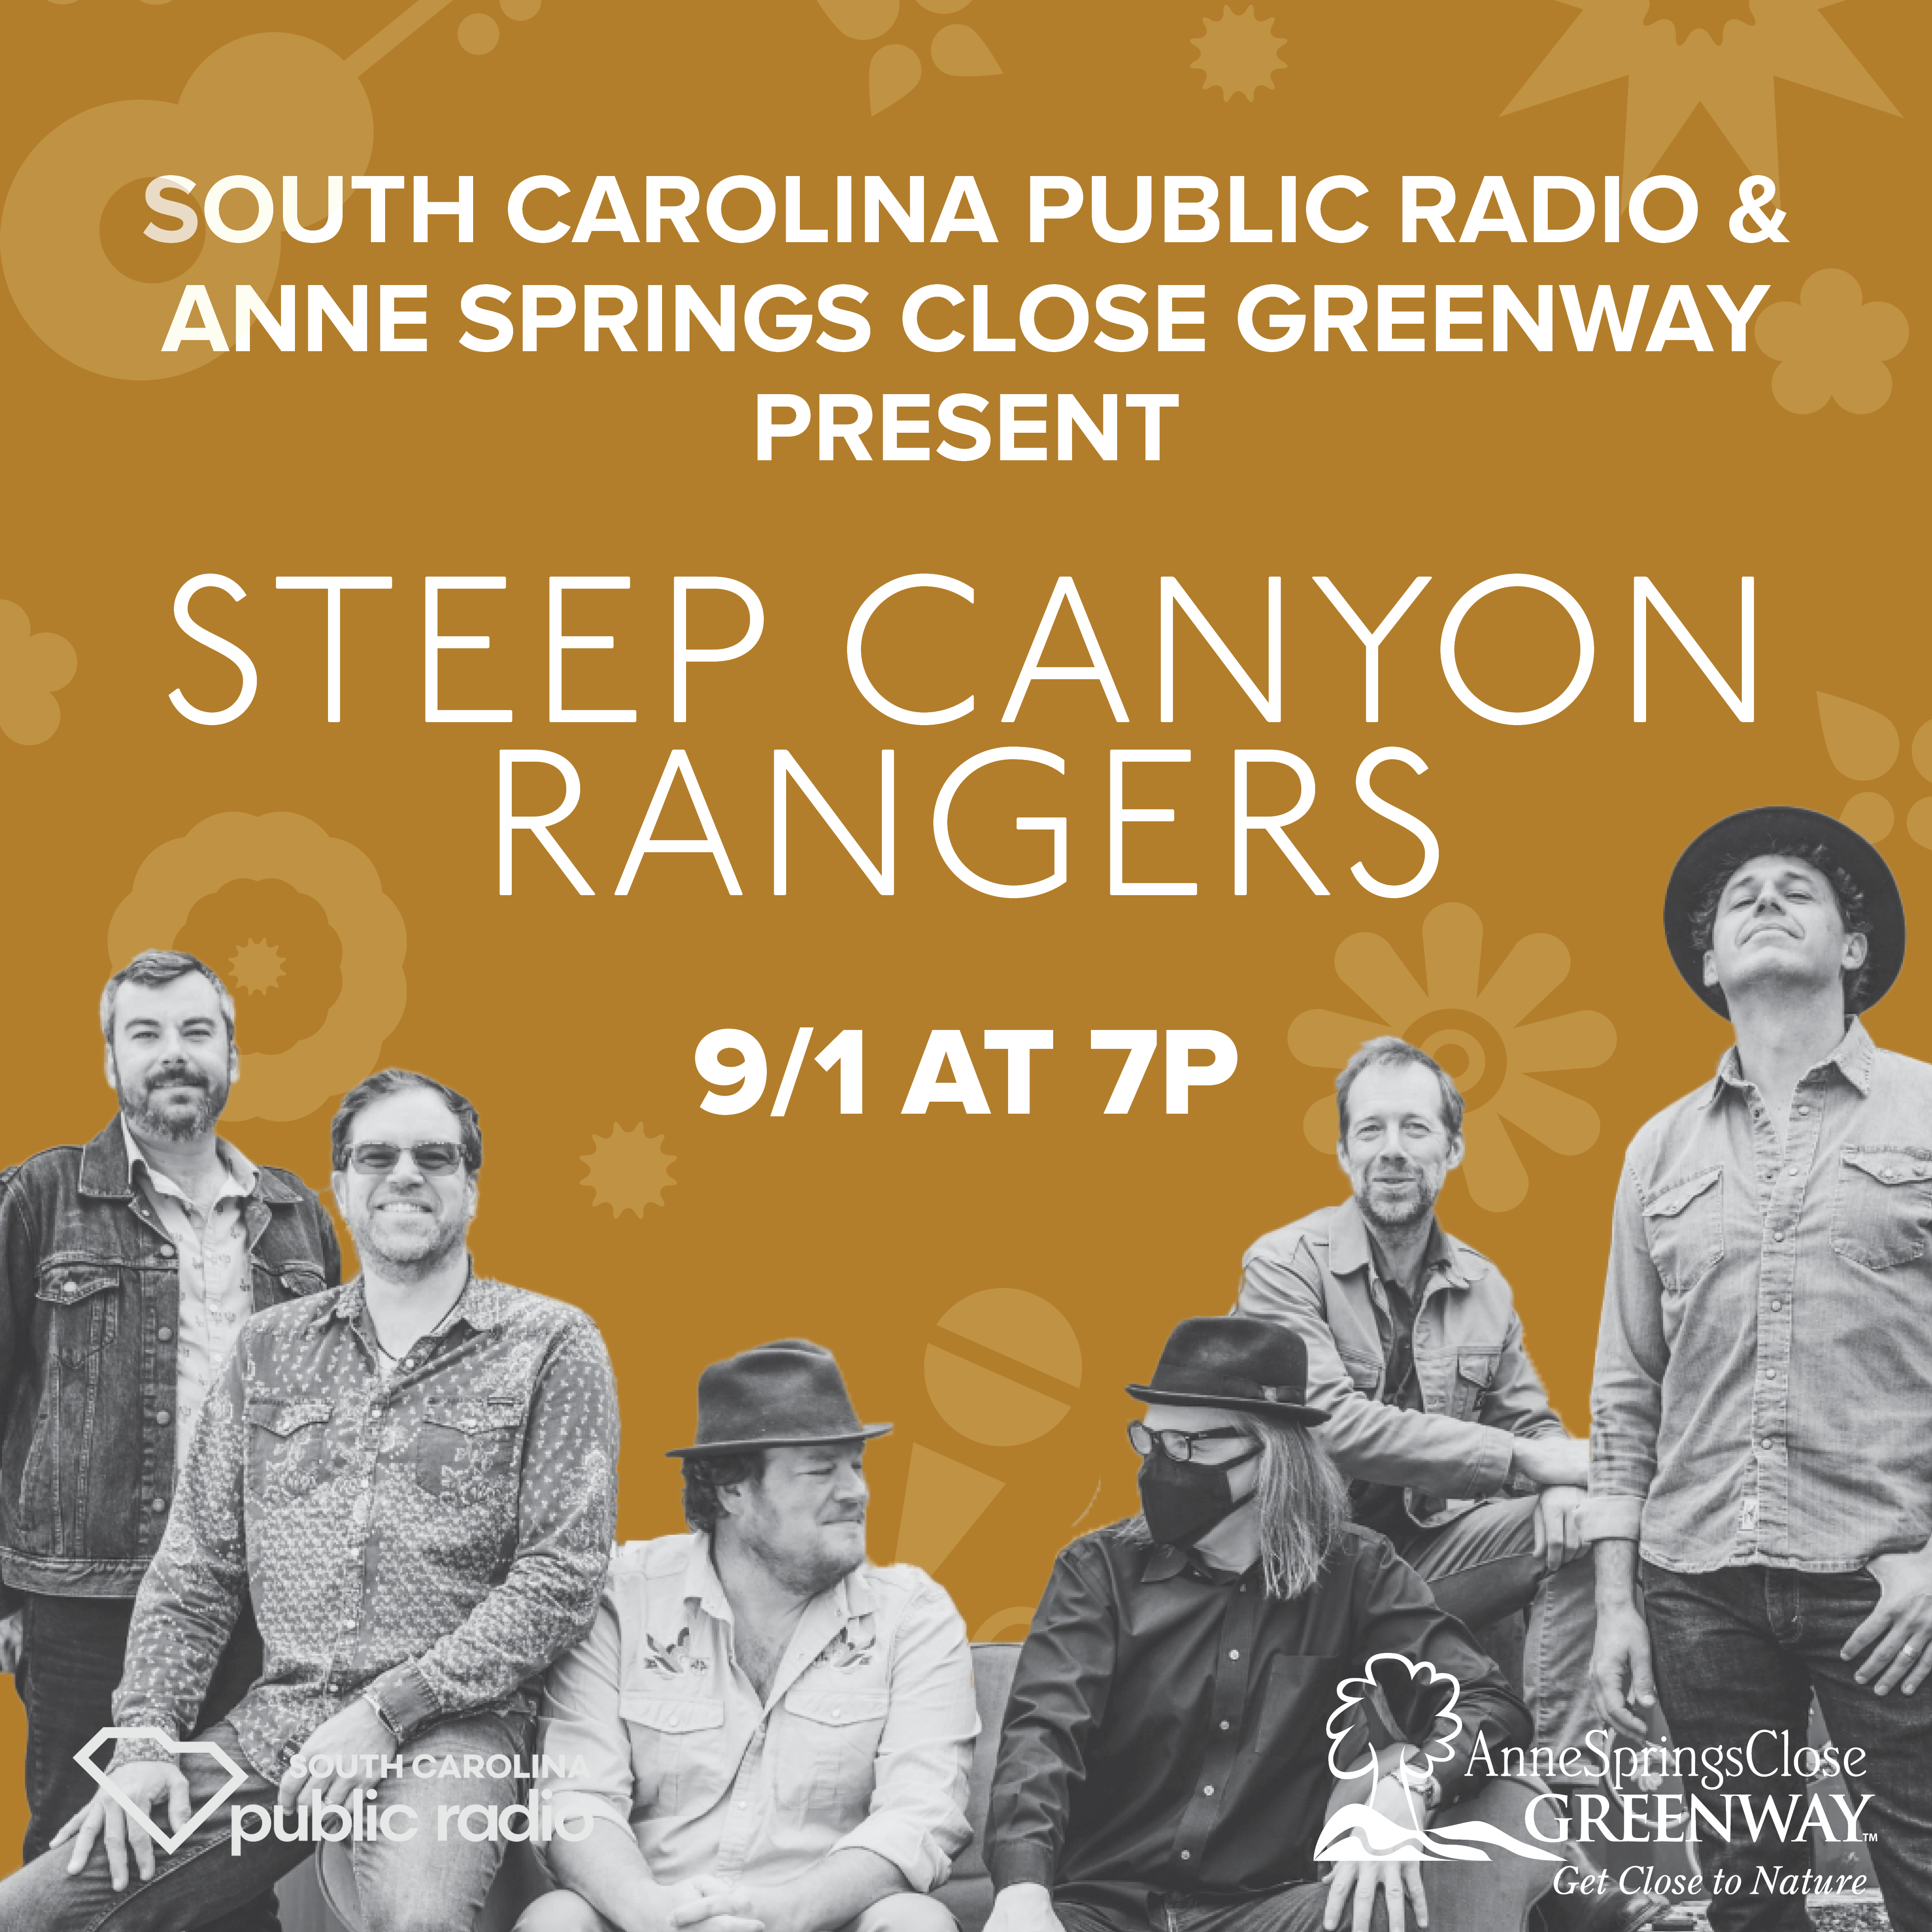 Steep Canyon Rangers Concert